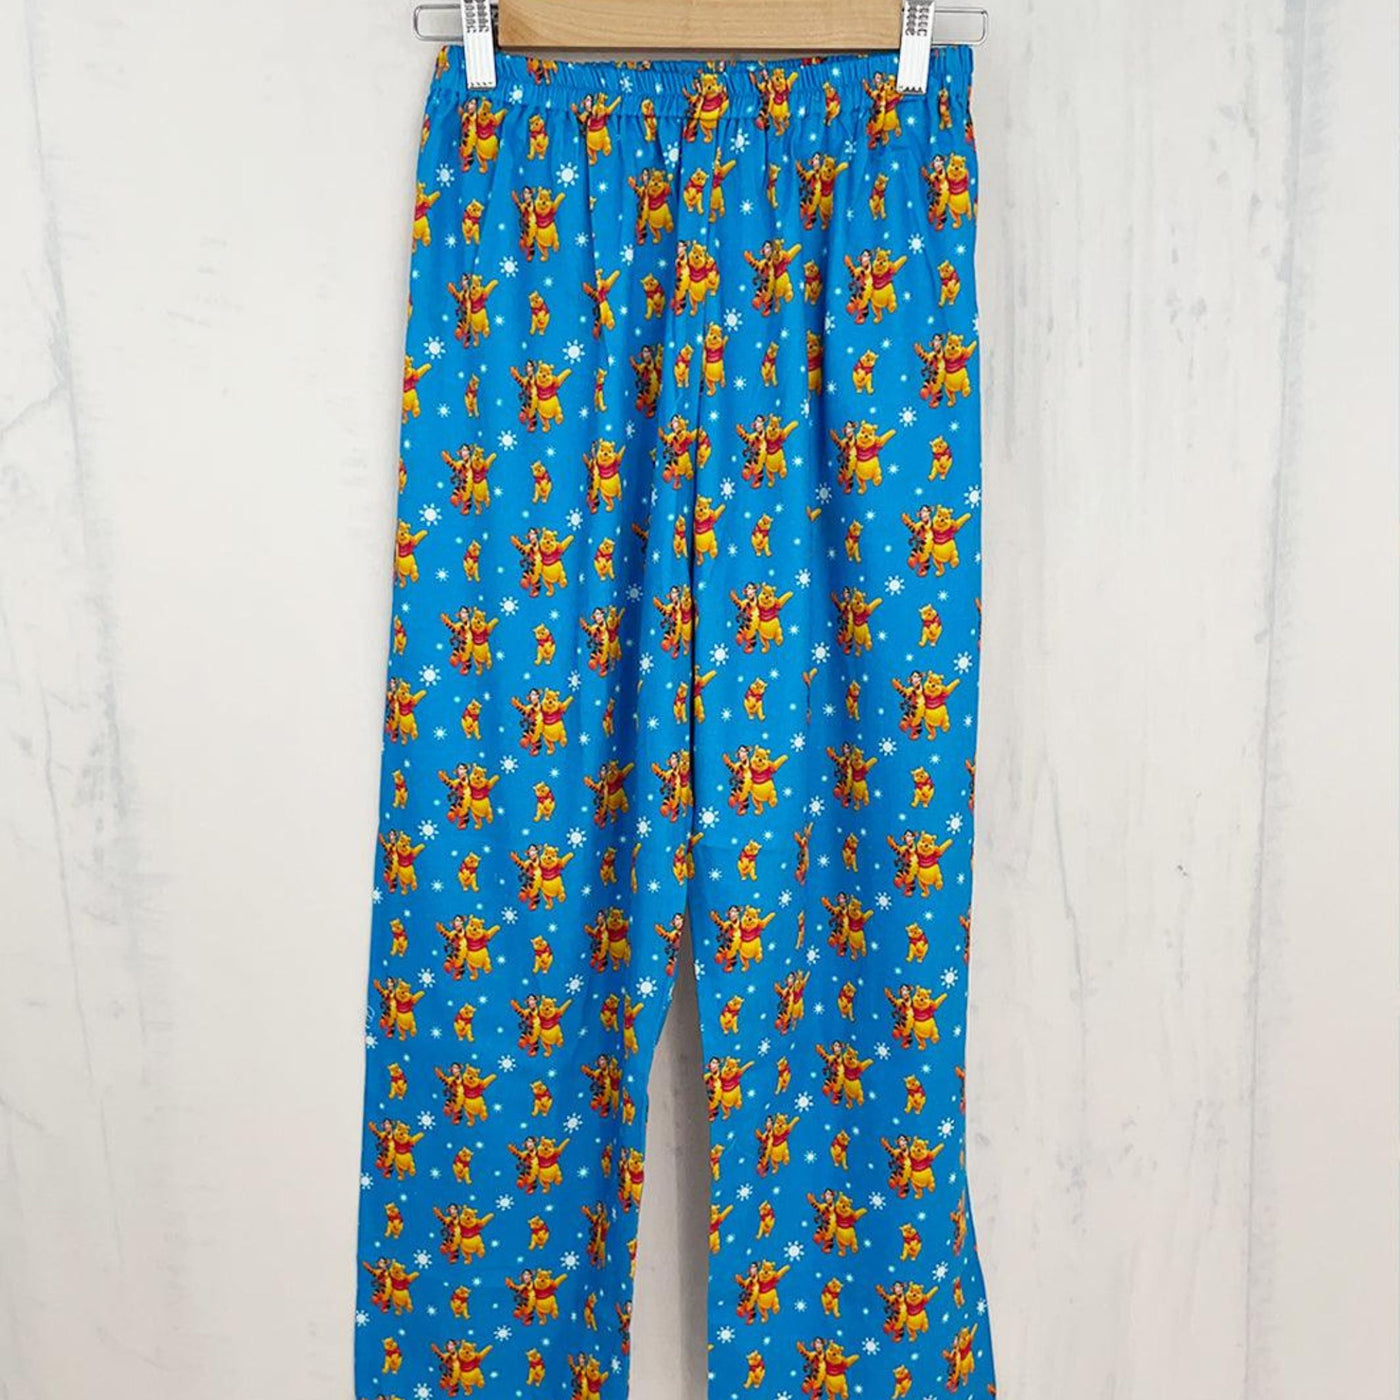 Pocket Nightwear for Girls and Boys - Winnie the pooh print Joeycare 